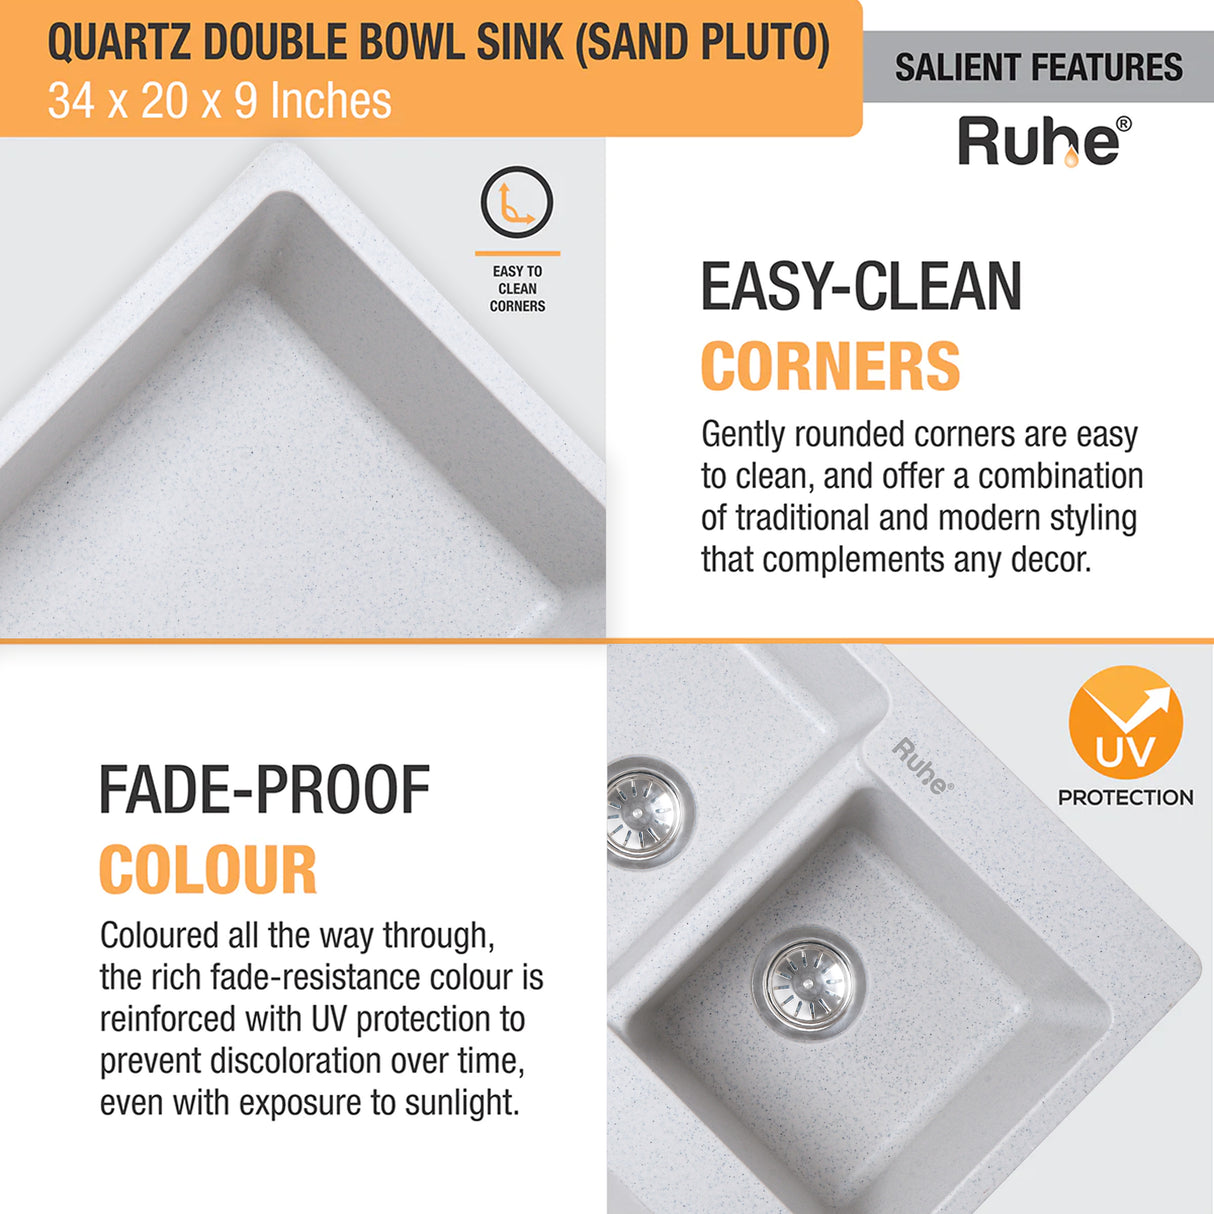 Quartz Double Bowl Kitchen Sink - Sand Pluto (34 x 20 x 9 inches) - by Ruhe®